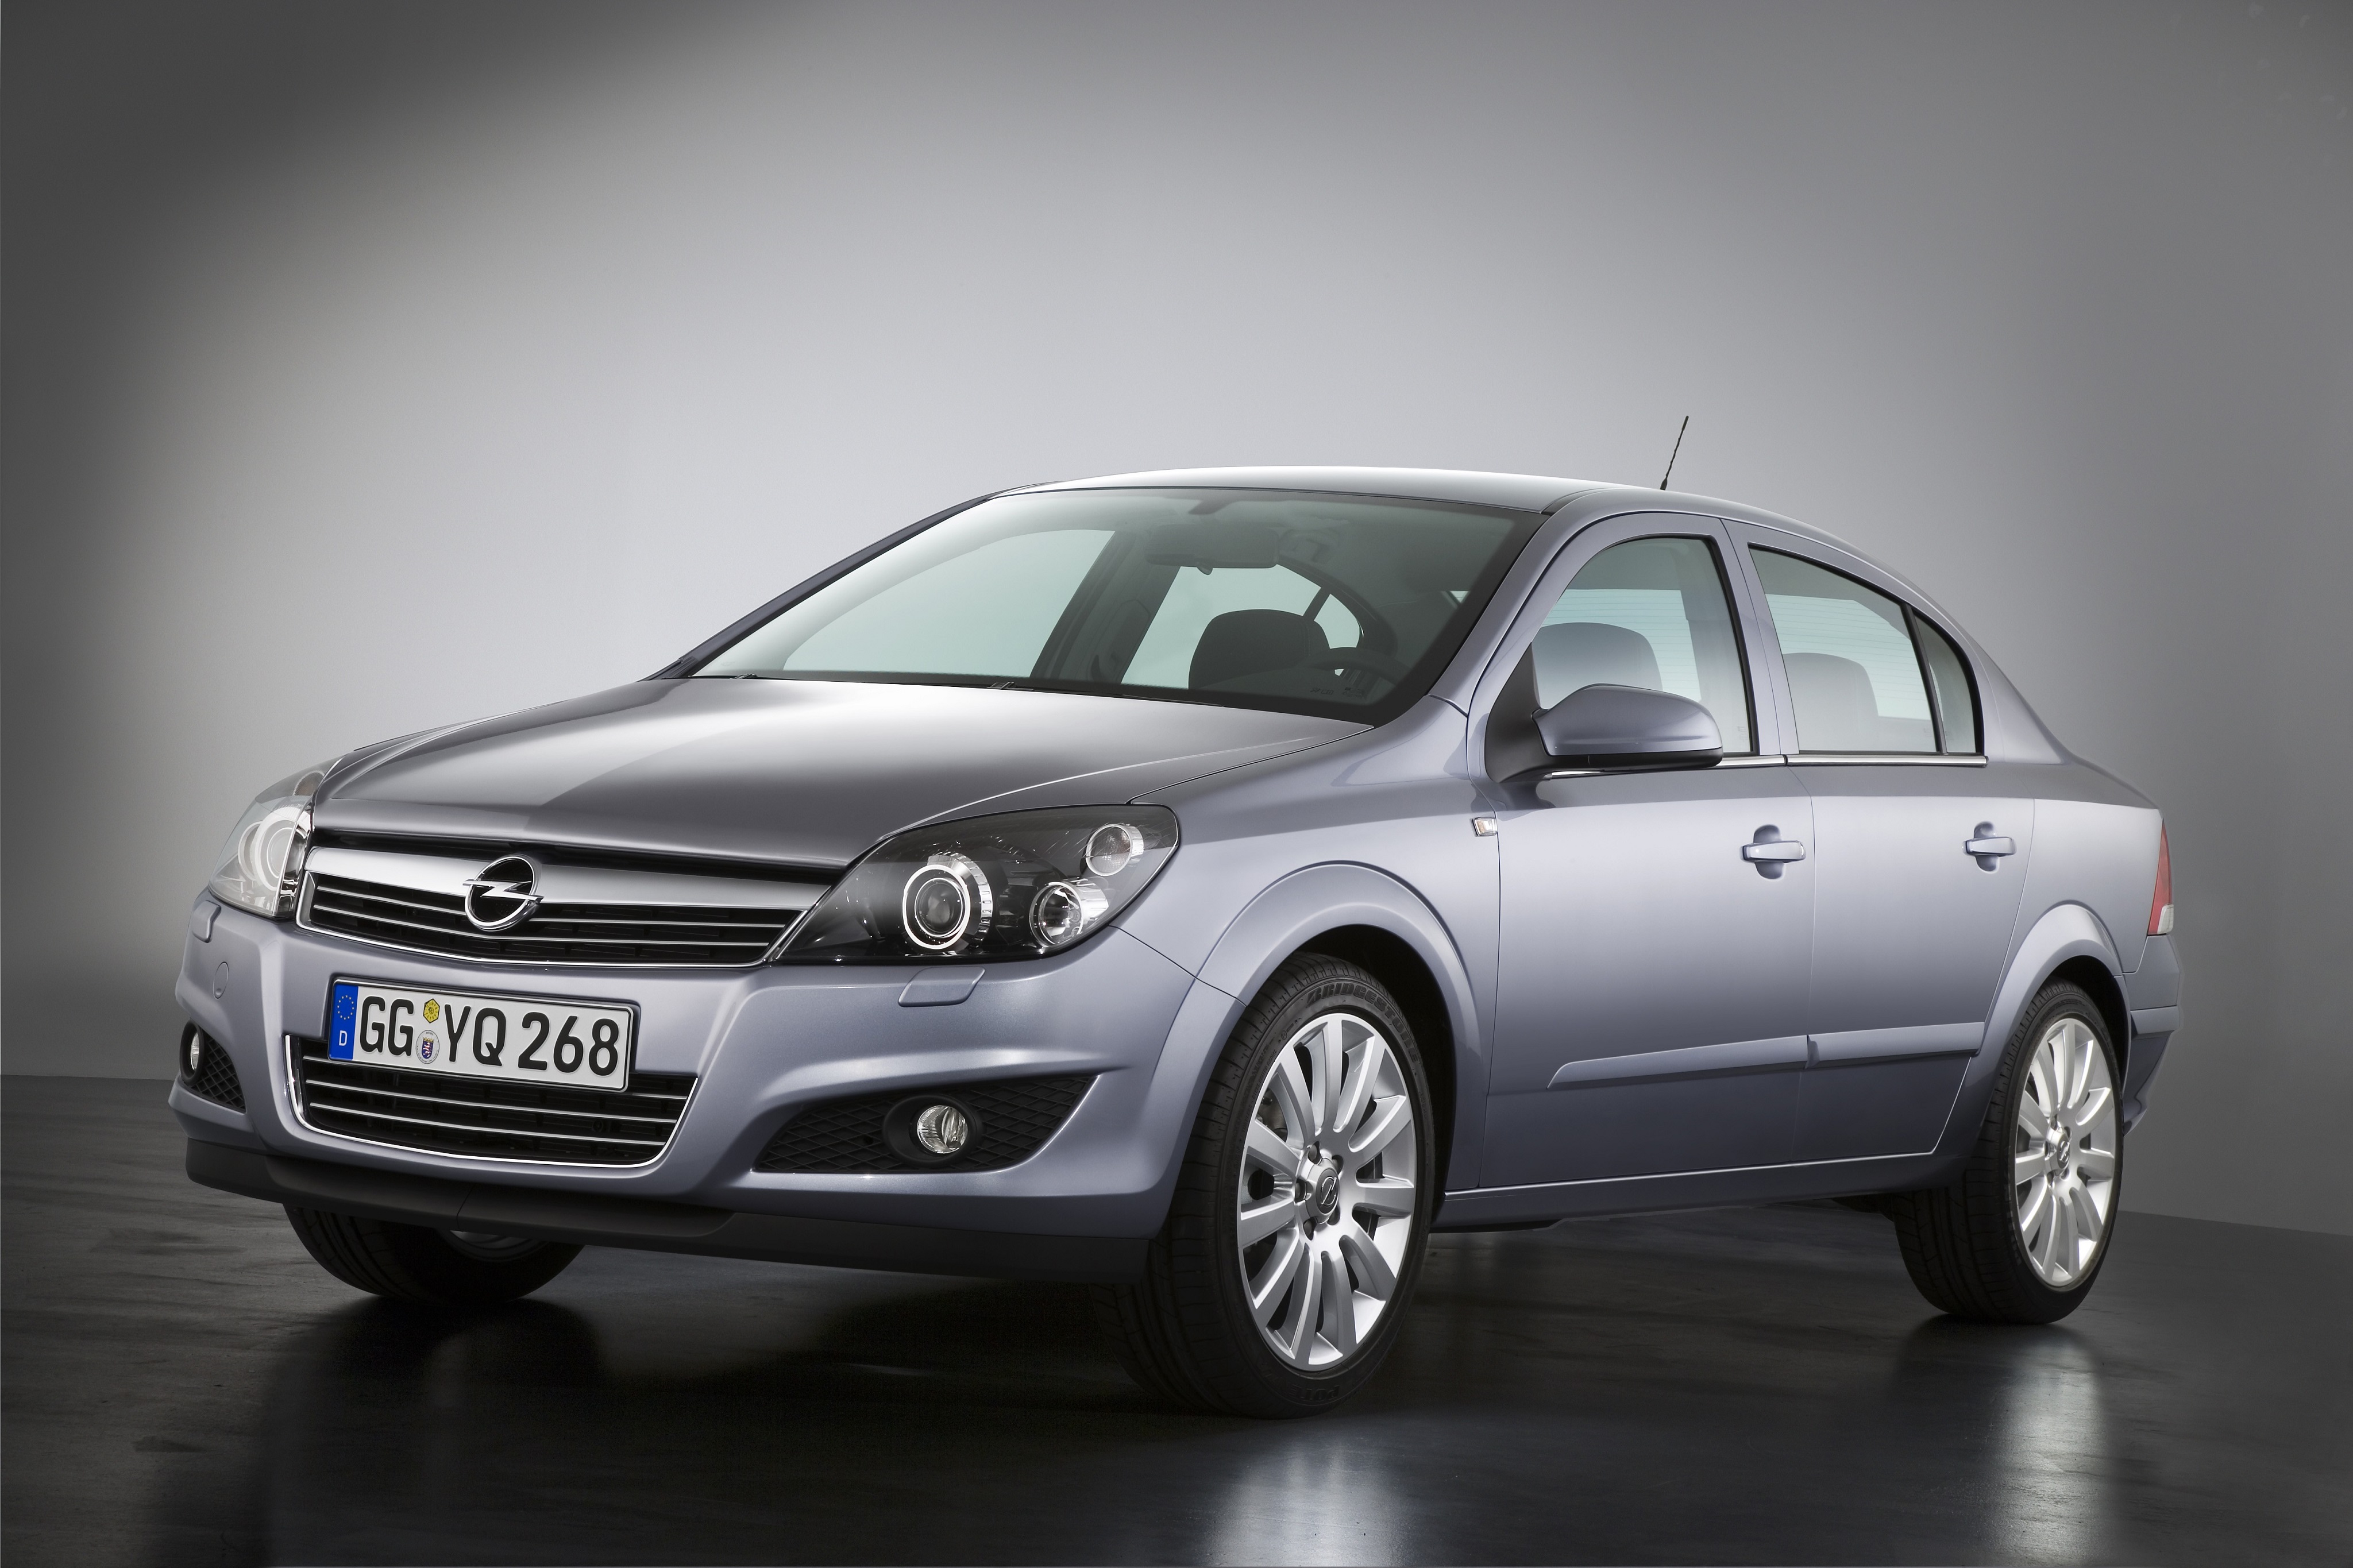 Opel family. Opel Astra h 2007 седан. Opel Astra h 2007 1.8. Opel Astra 2007 седан. Opel Astra h 1.6 седан 2011.